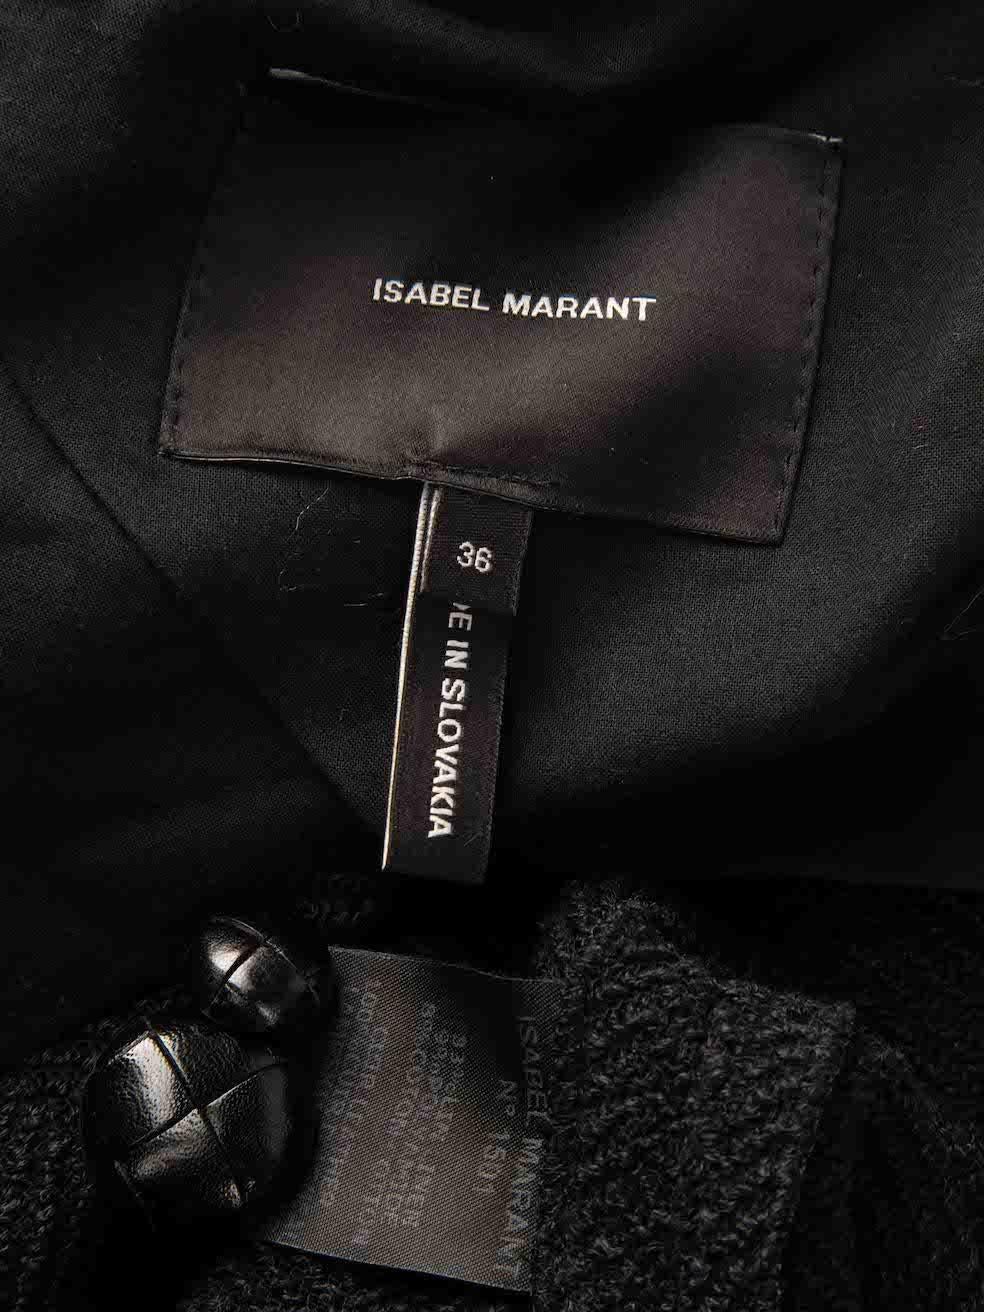 Isabel Marant Black Herringbone Tweed Jacket Size S For Sale 3